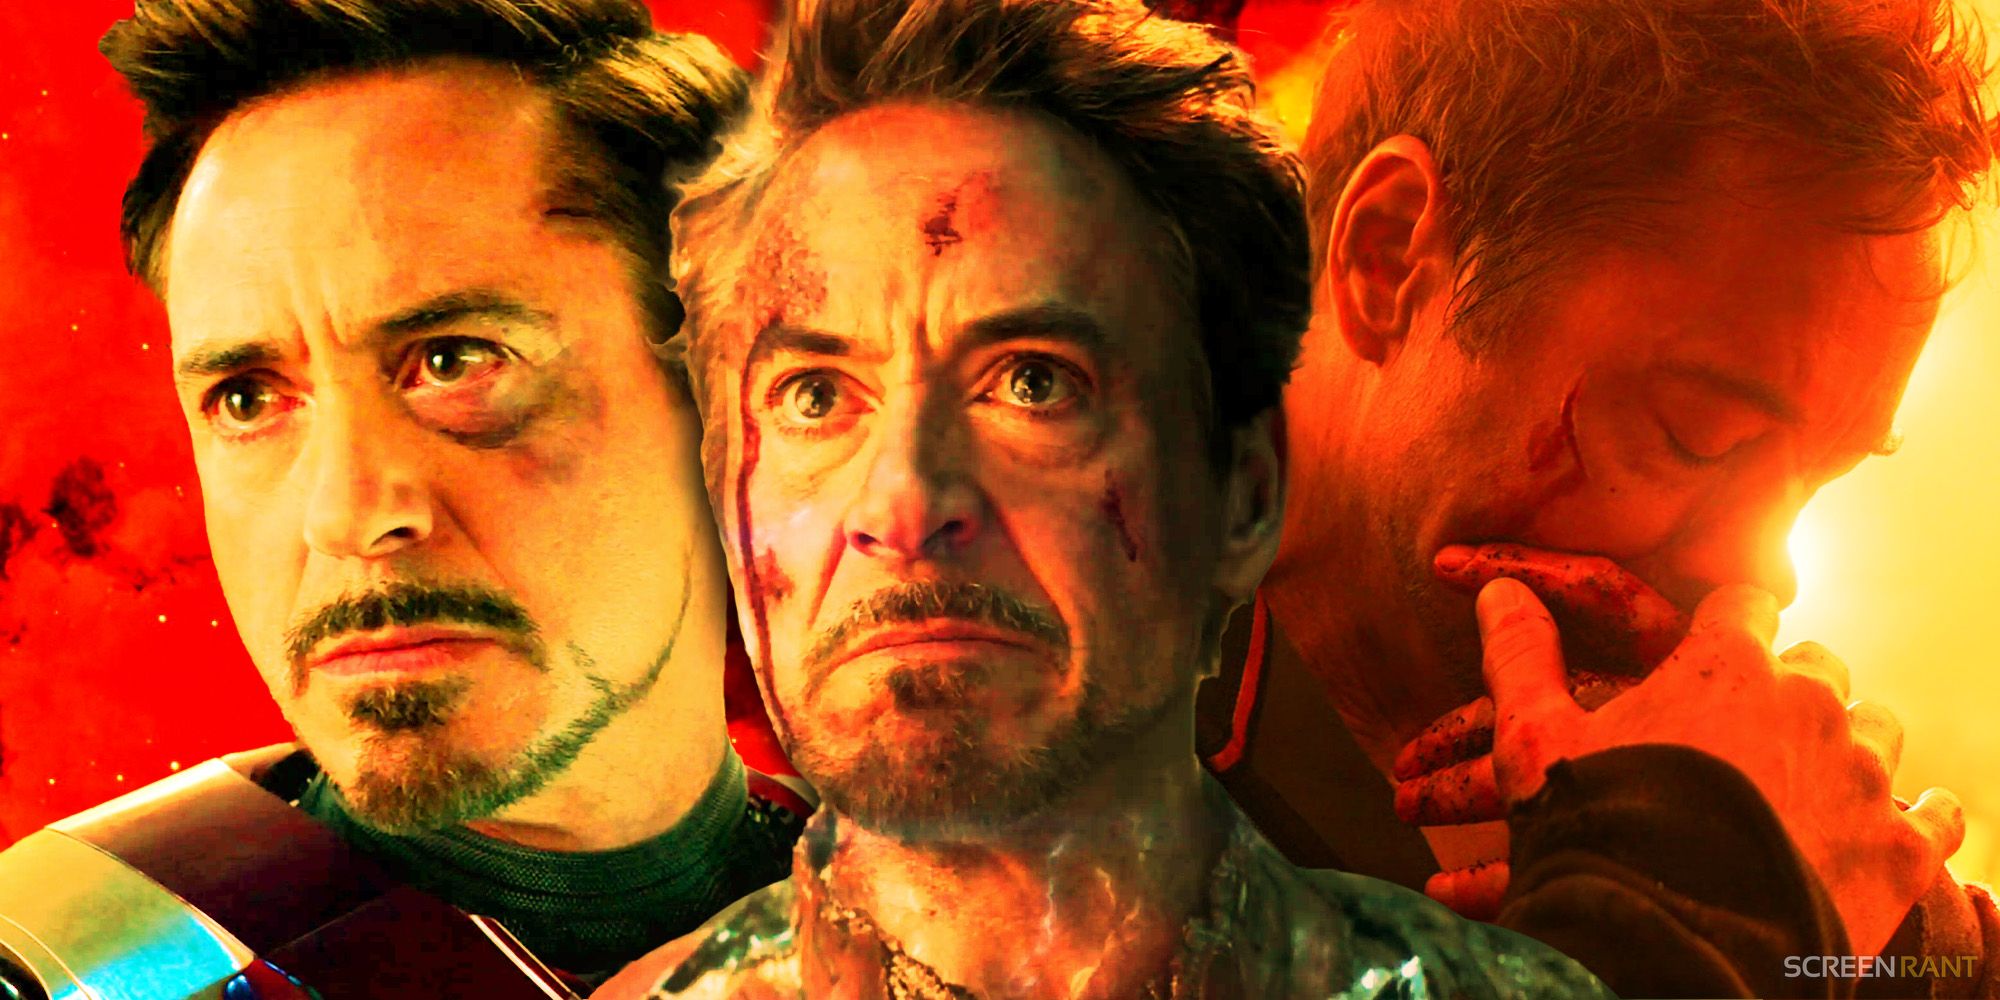 Iron Man in Civil War, Endgame, and Infinity War